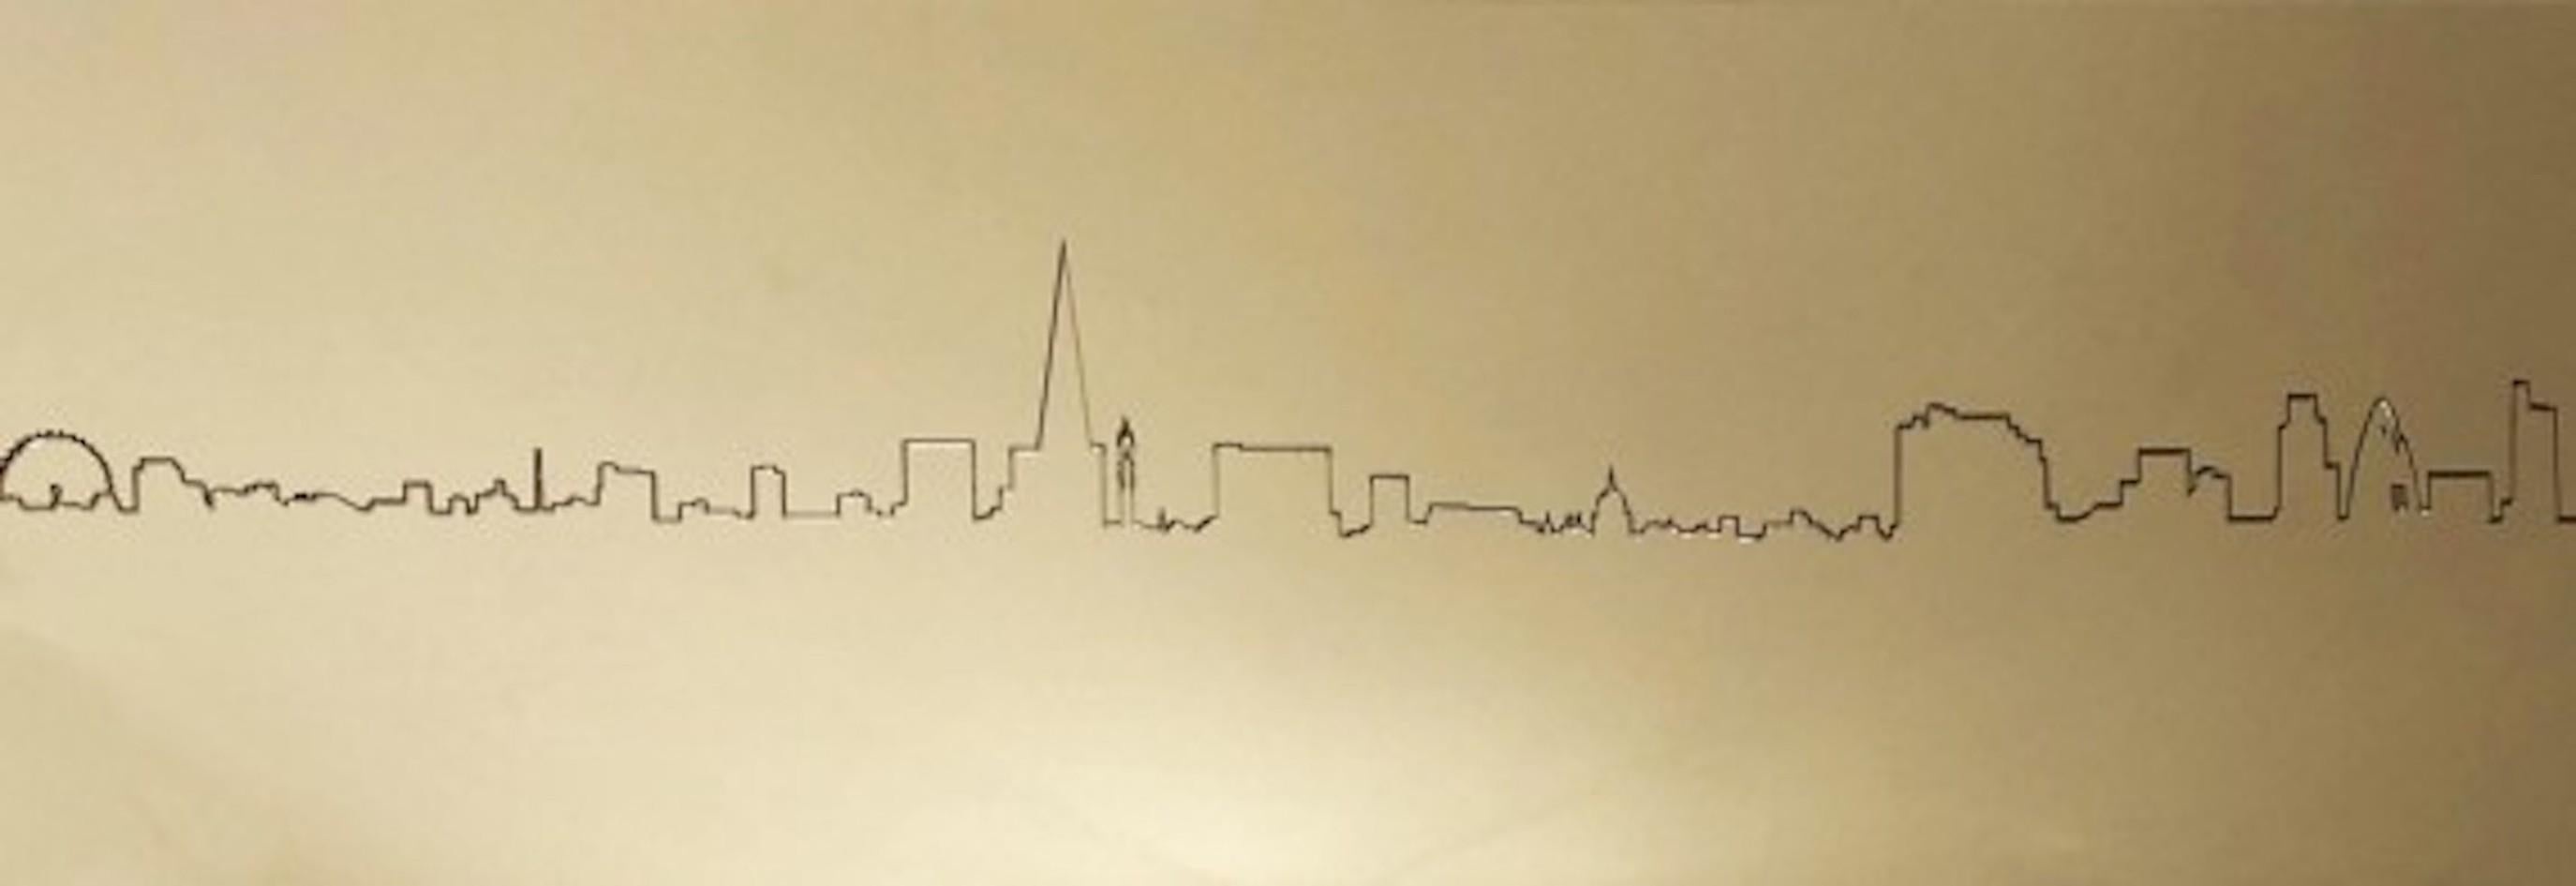 City of Surprises, Cityscape Art, zeitgenössische minimalistische Londoner Kunst, Linienkunst